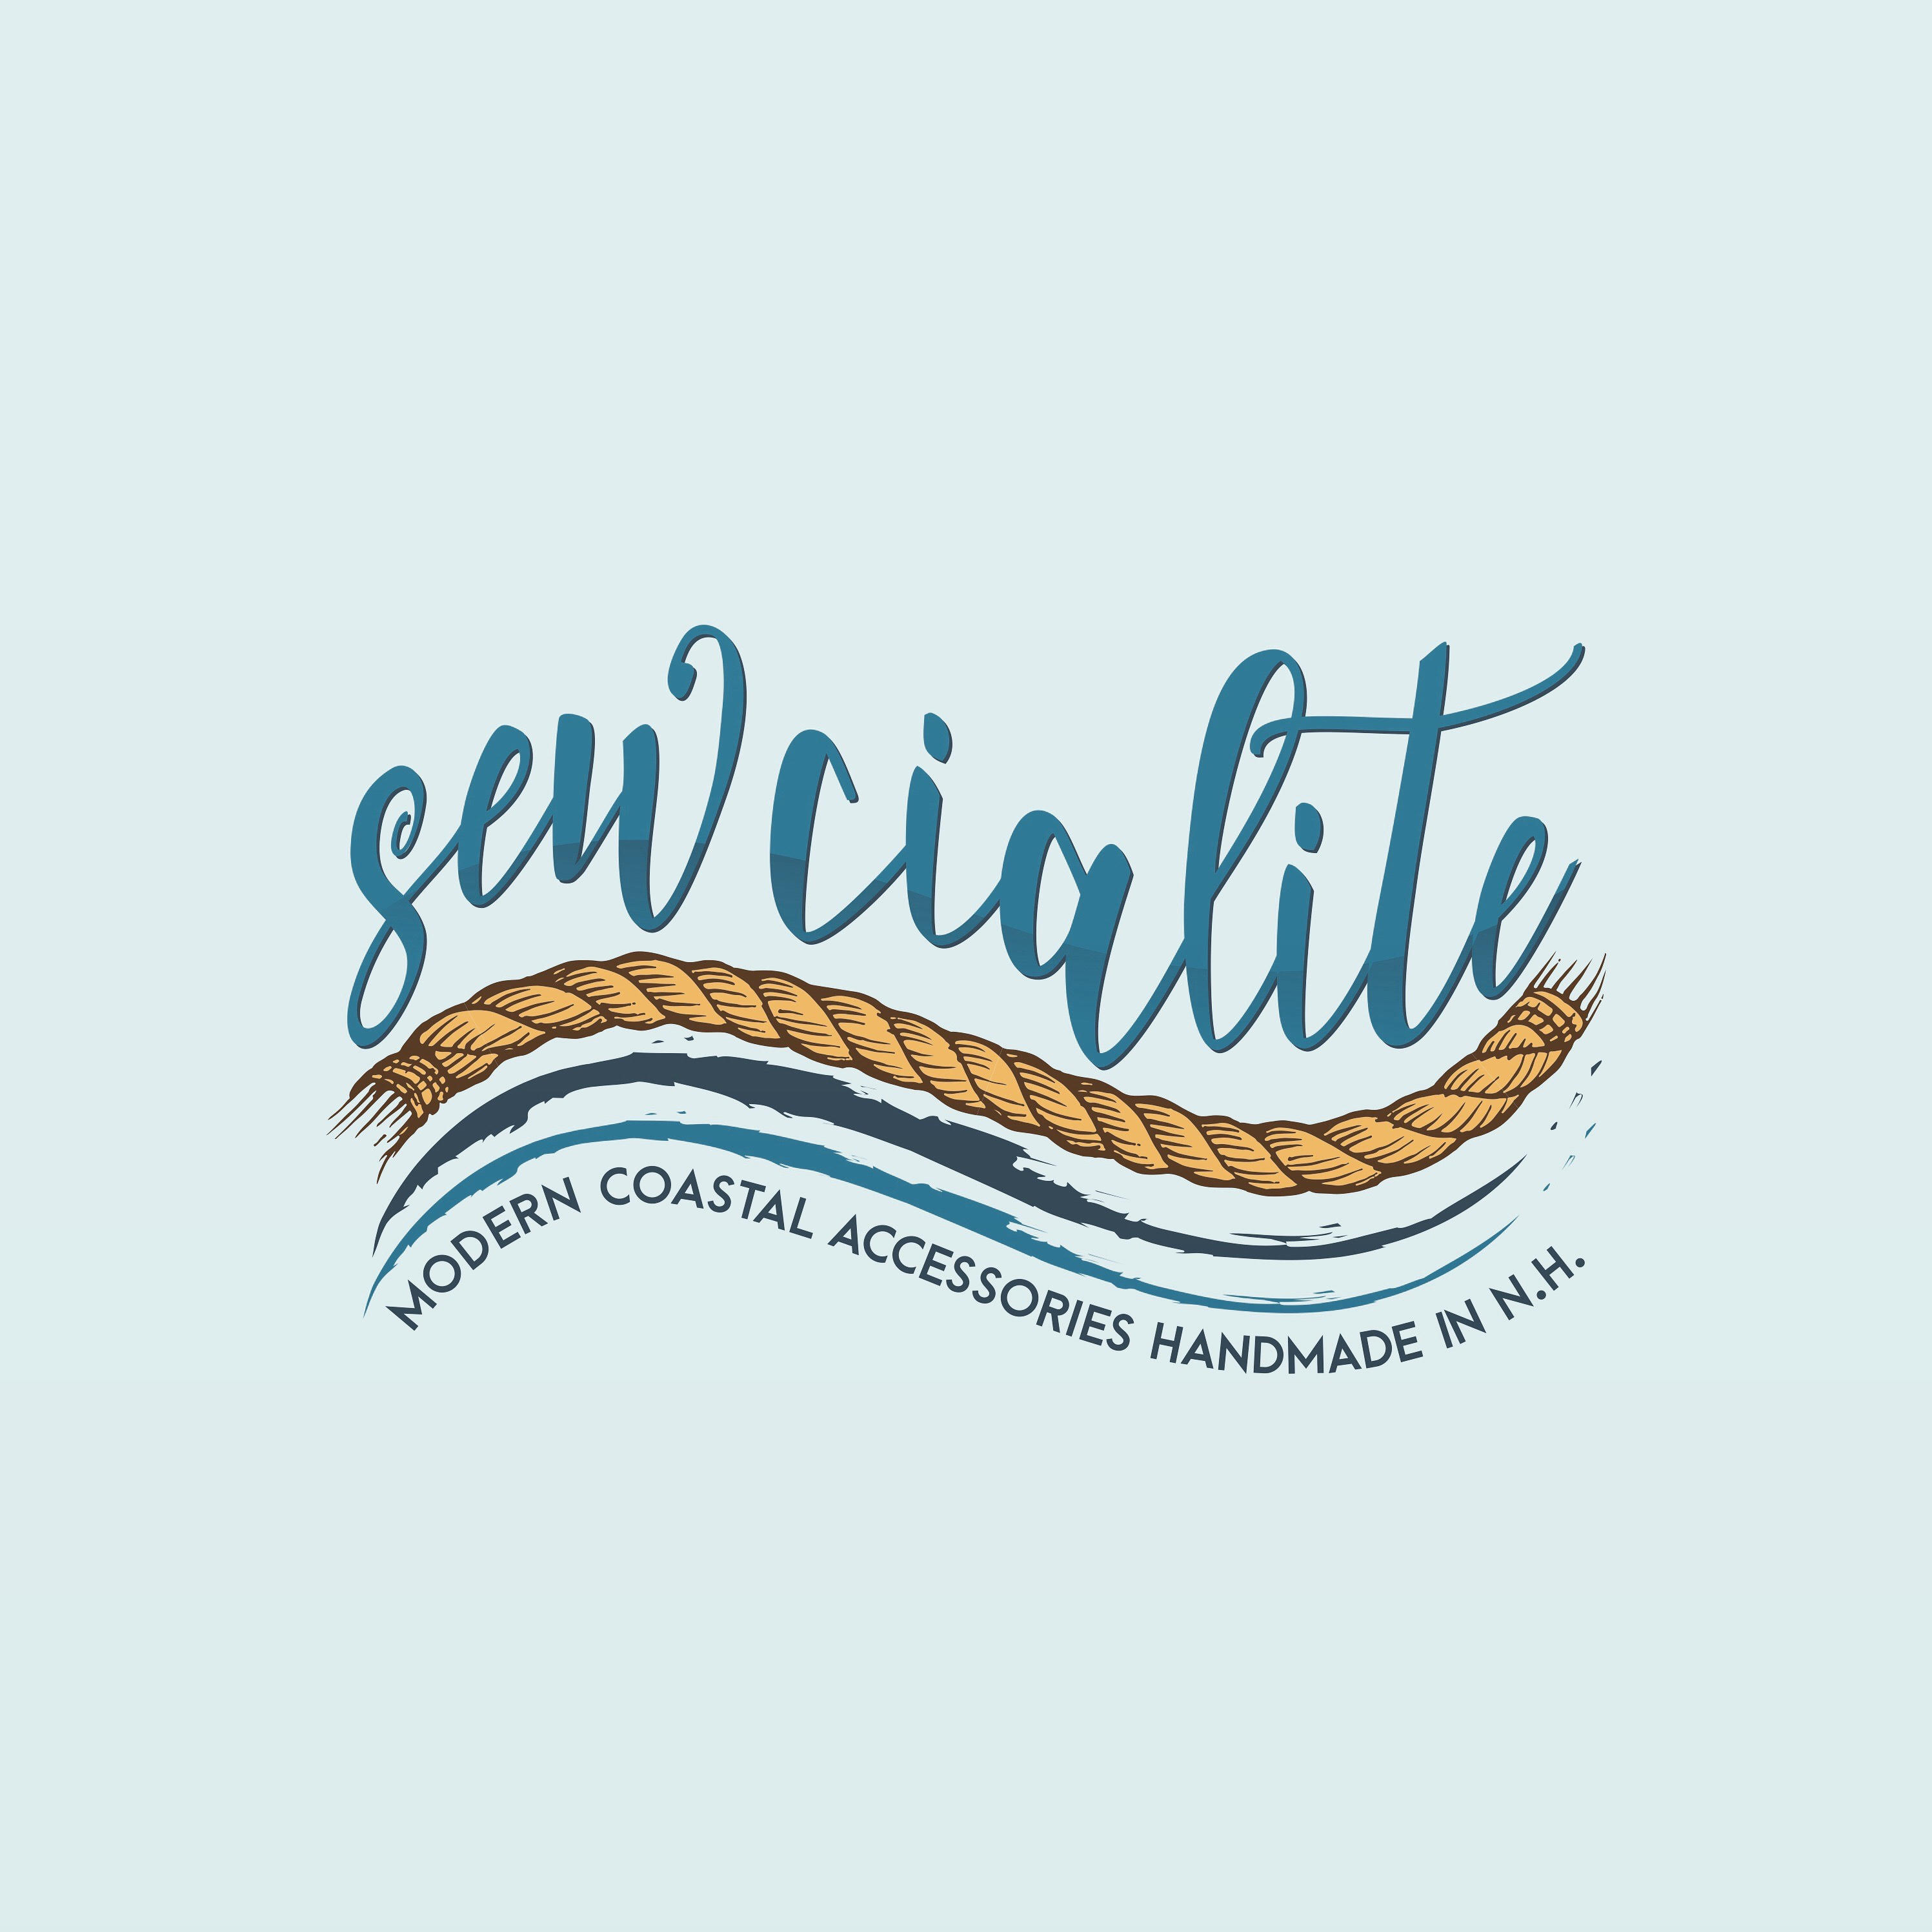 Sewcialite logo - Modern Coastal Accessories Handmade in New Hampshire